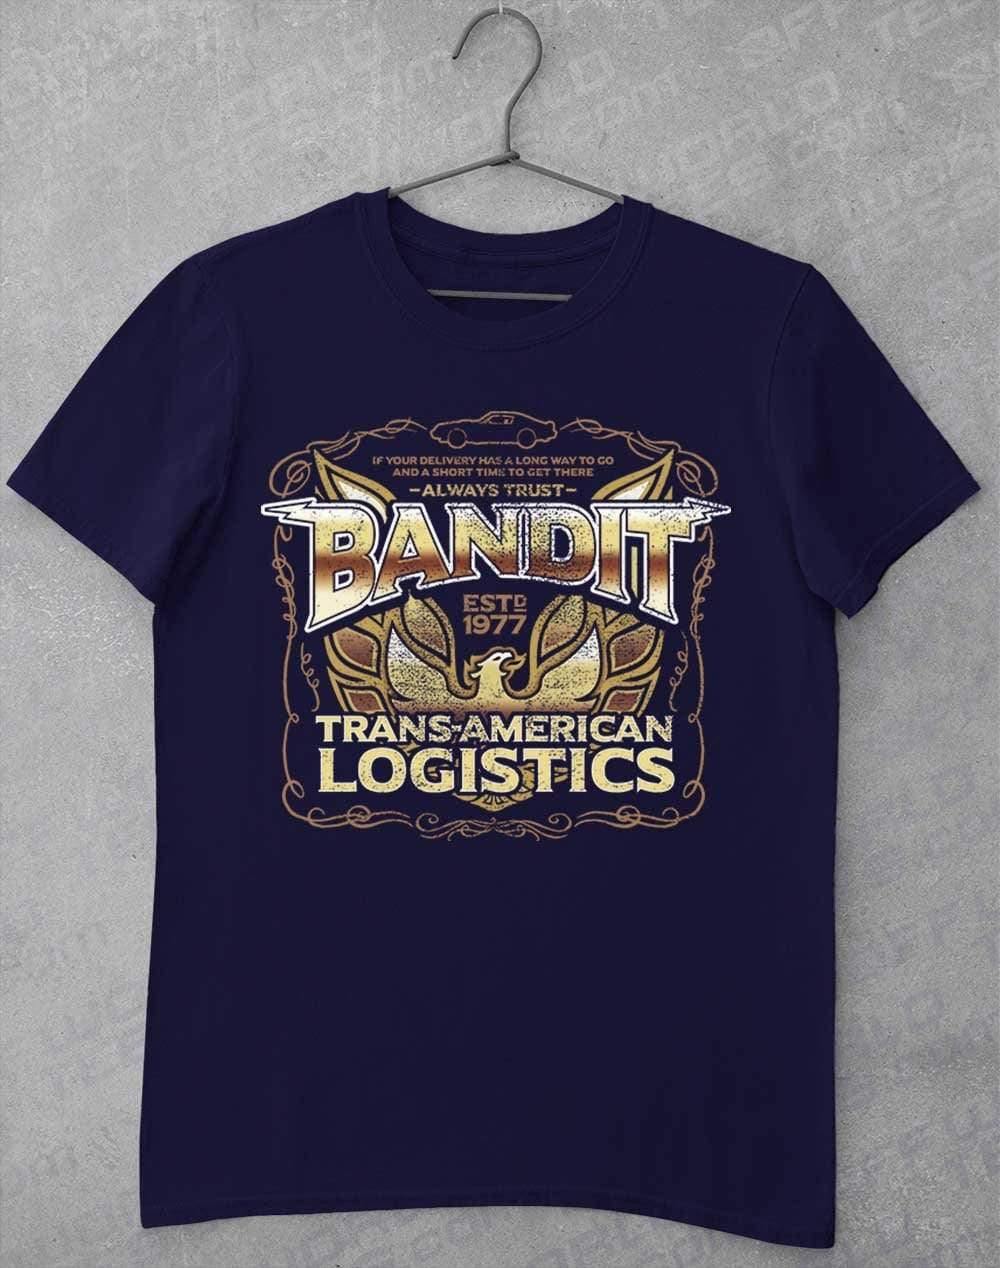 Bandit Logistics 1977 T-Shirt S / Navy  - Off World Tees